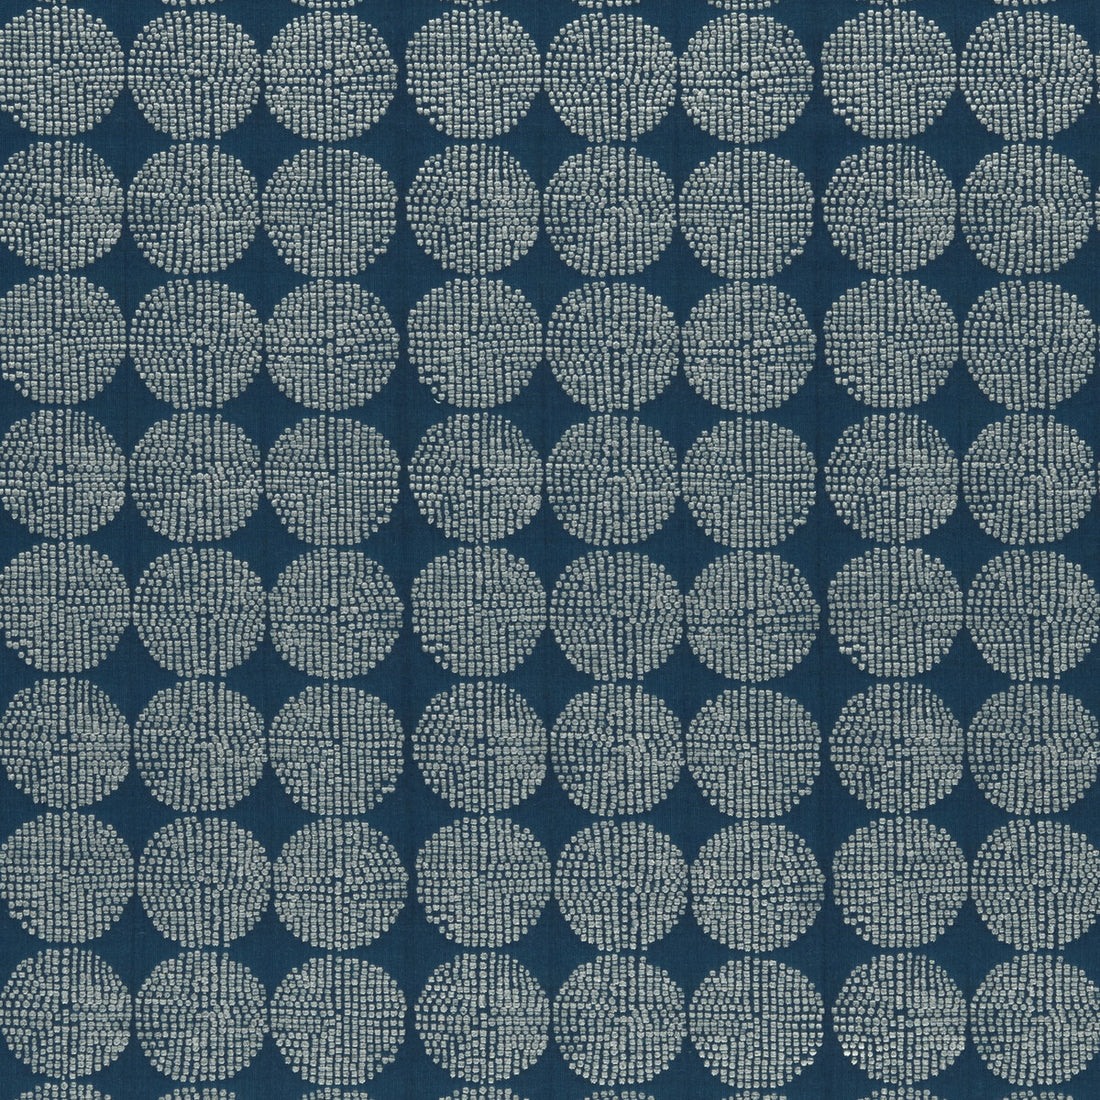 Kiko fabric in aqua color - pattern F0956/01.CAC.0 - by Clarke And Clarke in the Clarke &amp; Clarke Amara collection